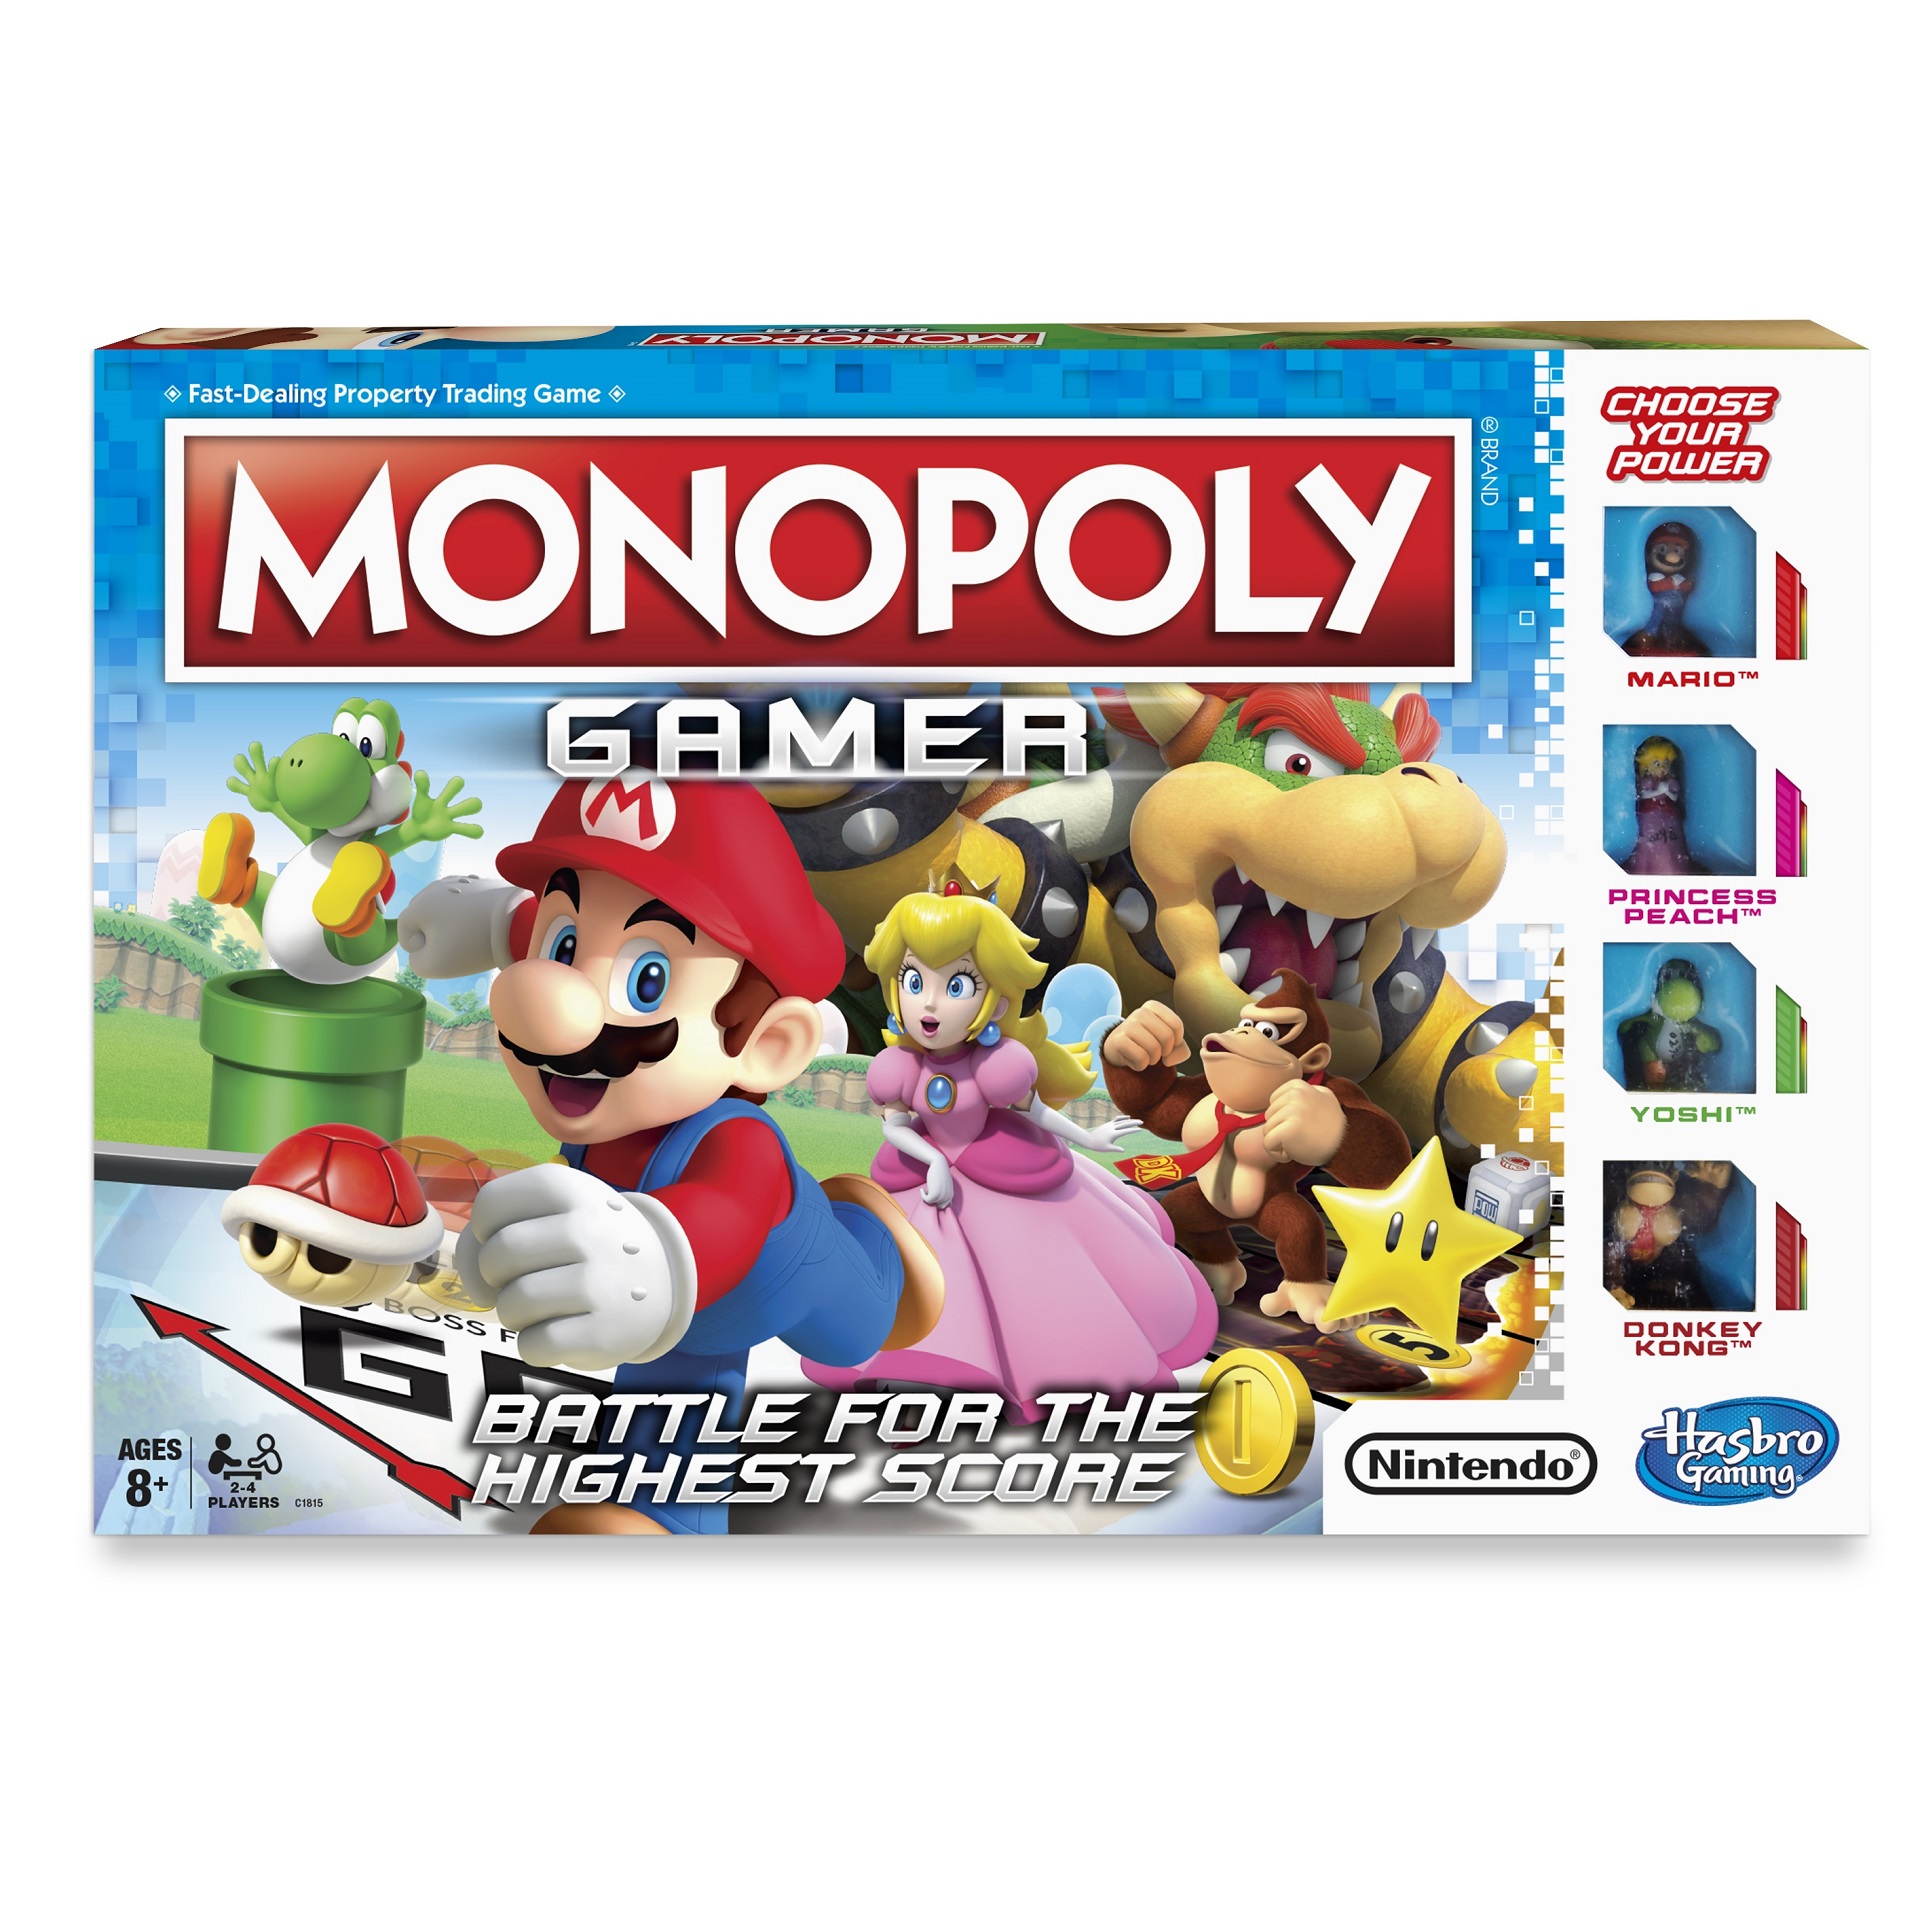 monopoly-gamer-box-image